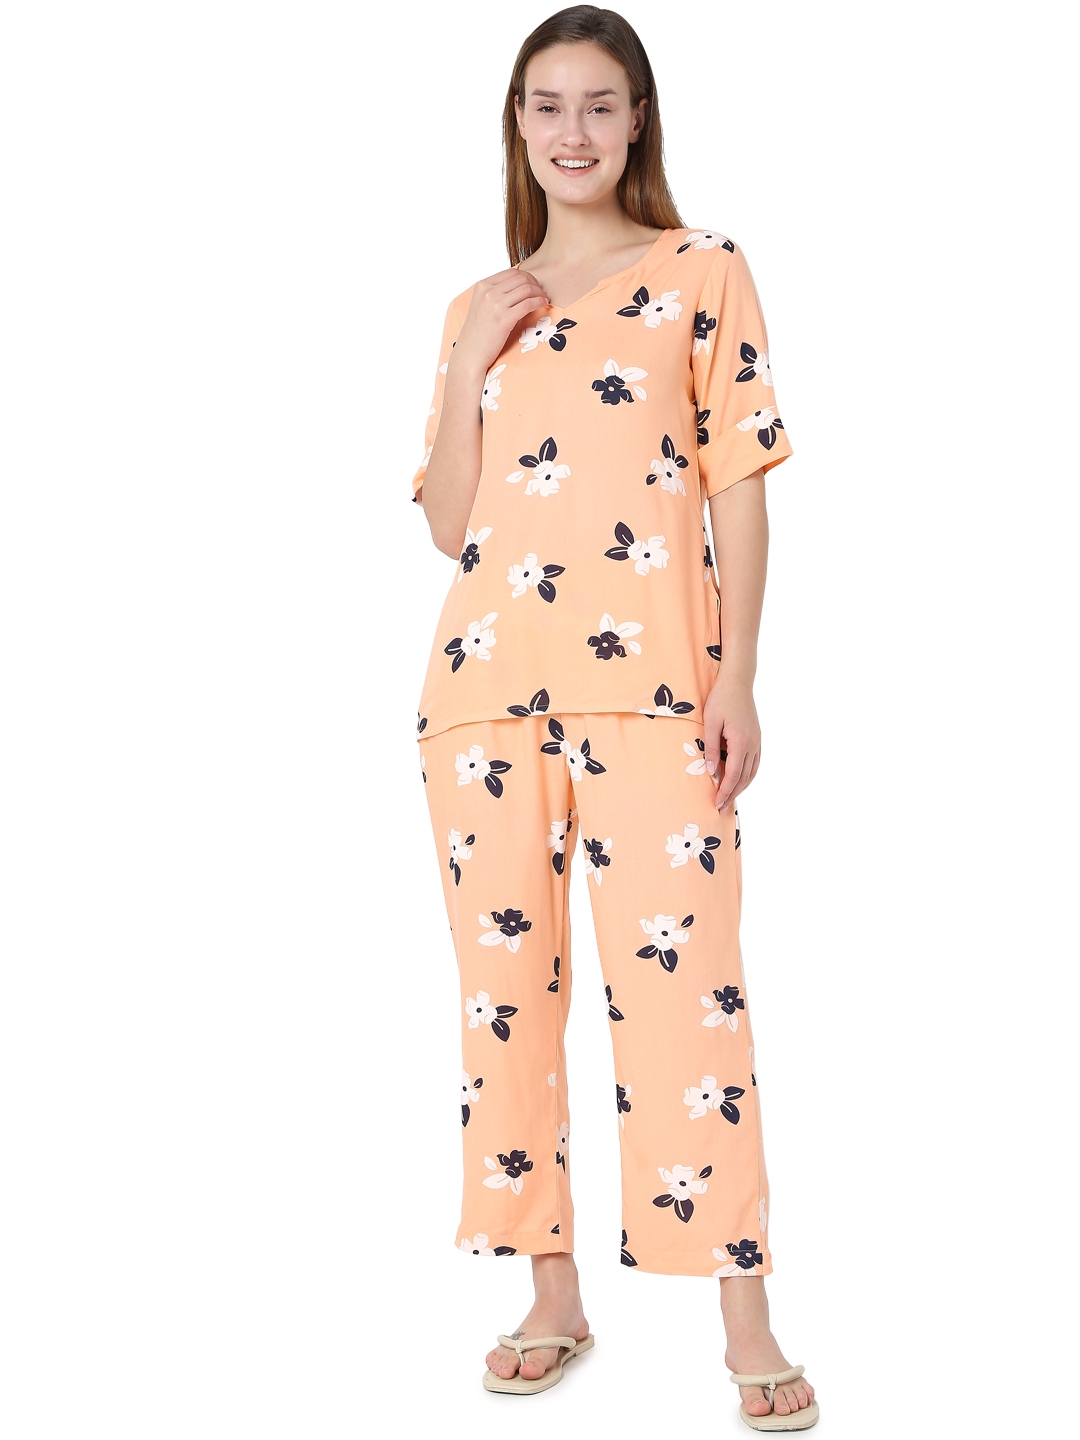 Smarty Pants | Smarty Pants women's cotton olive floral print night suit. 